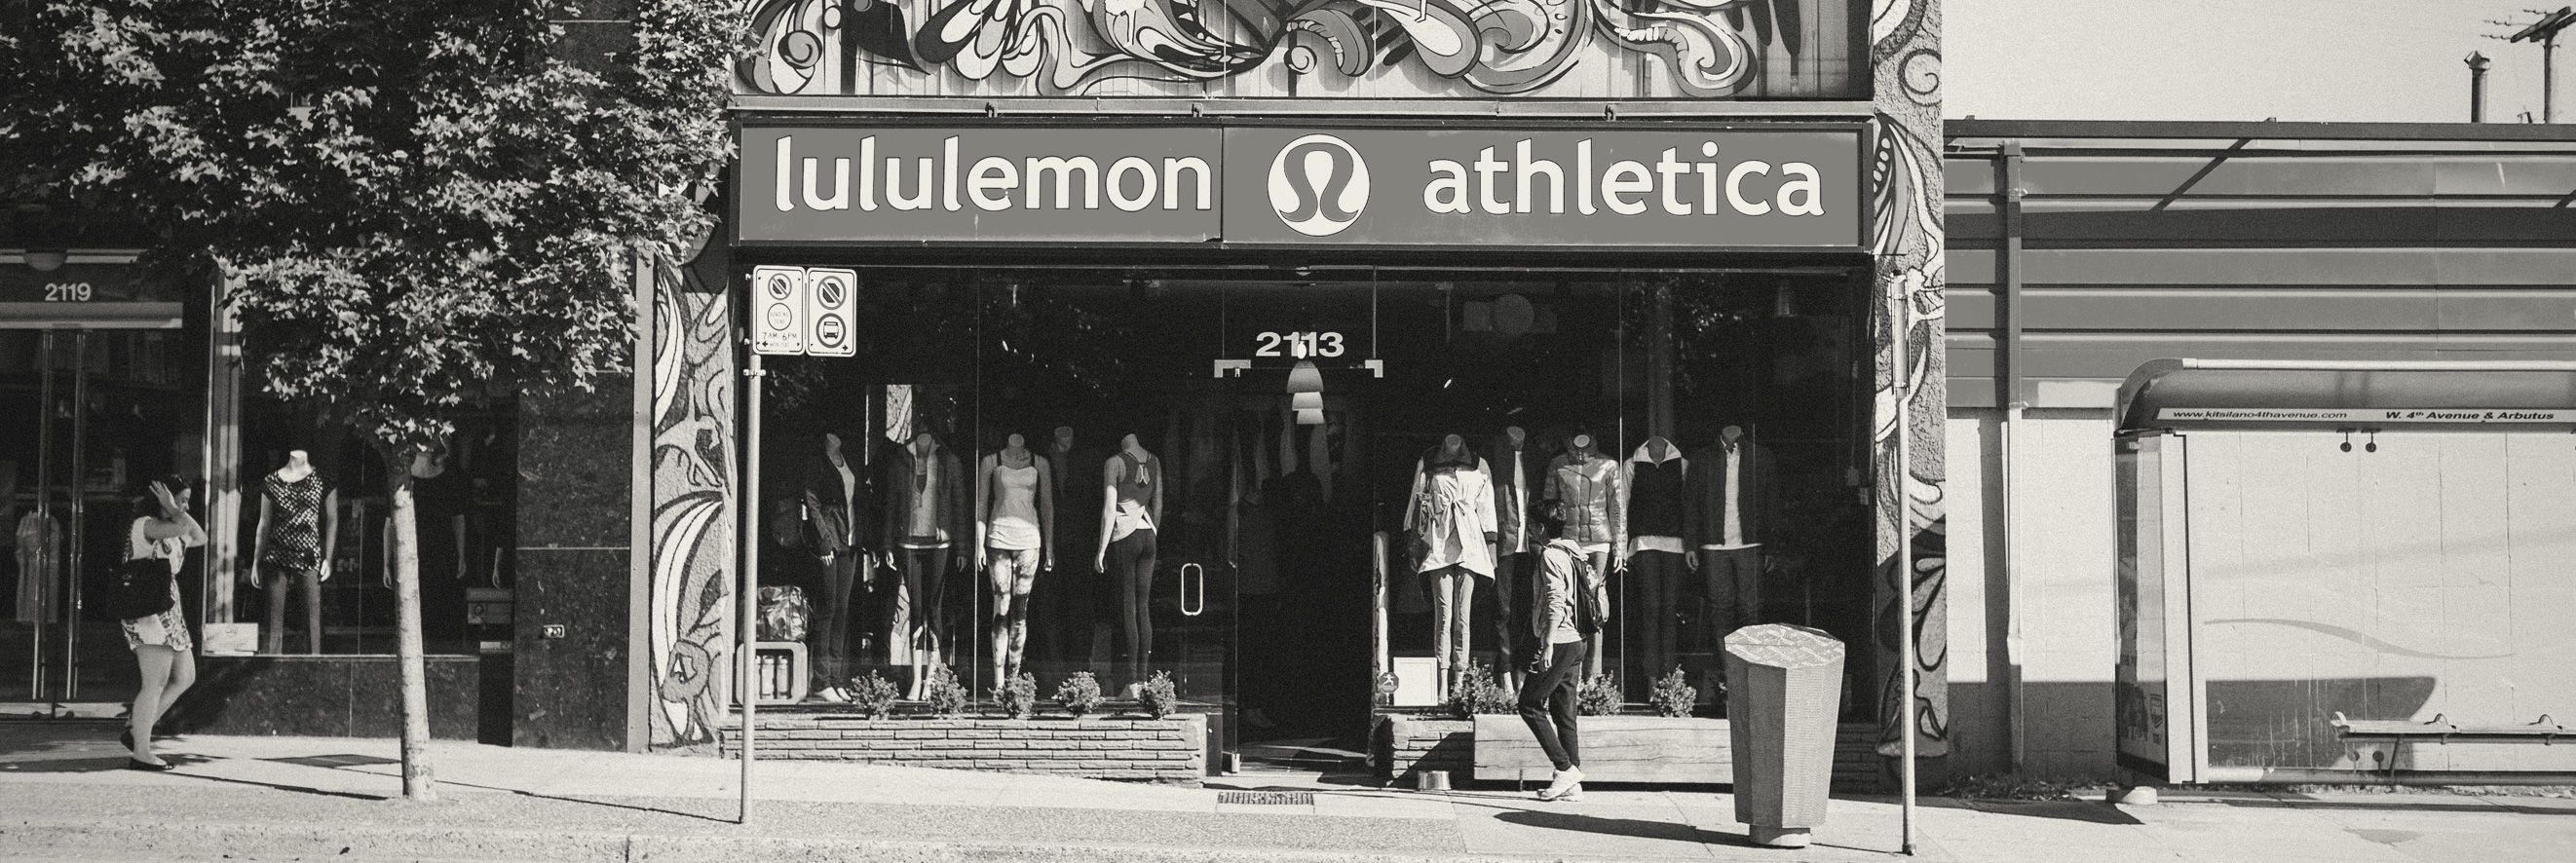 DTC Case Study: LuLulemon. Lululemon, founded in 1998, is an…